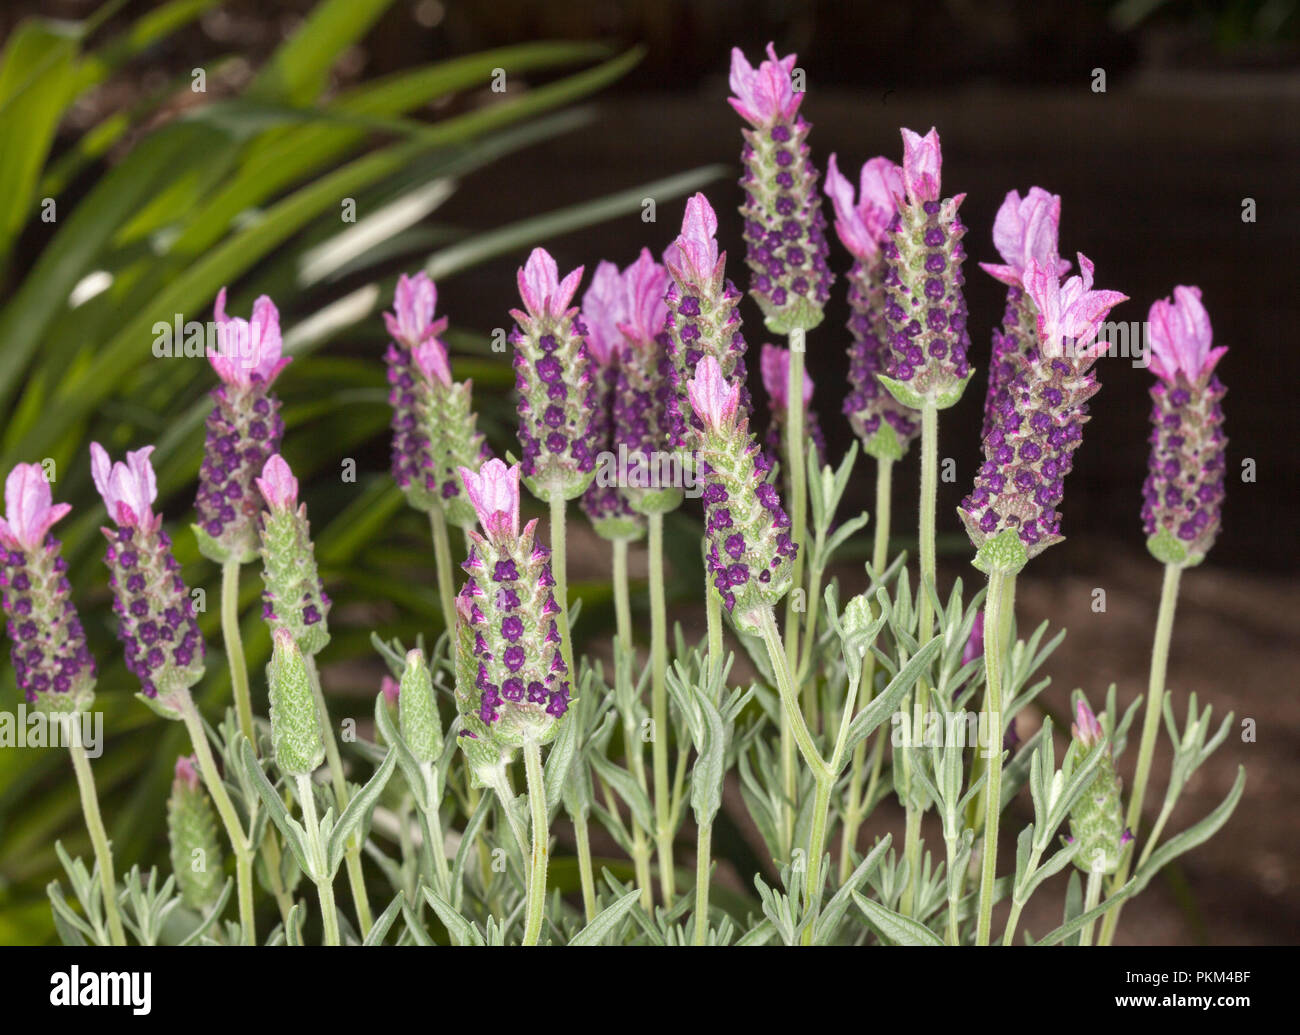 Cluster of pink / purple perfumed flowers and light green leavesof lavender, Lavendula pedunculata 'Blueberry Ruffles', on dark background Stock Photo